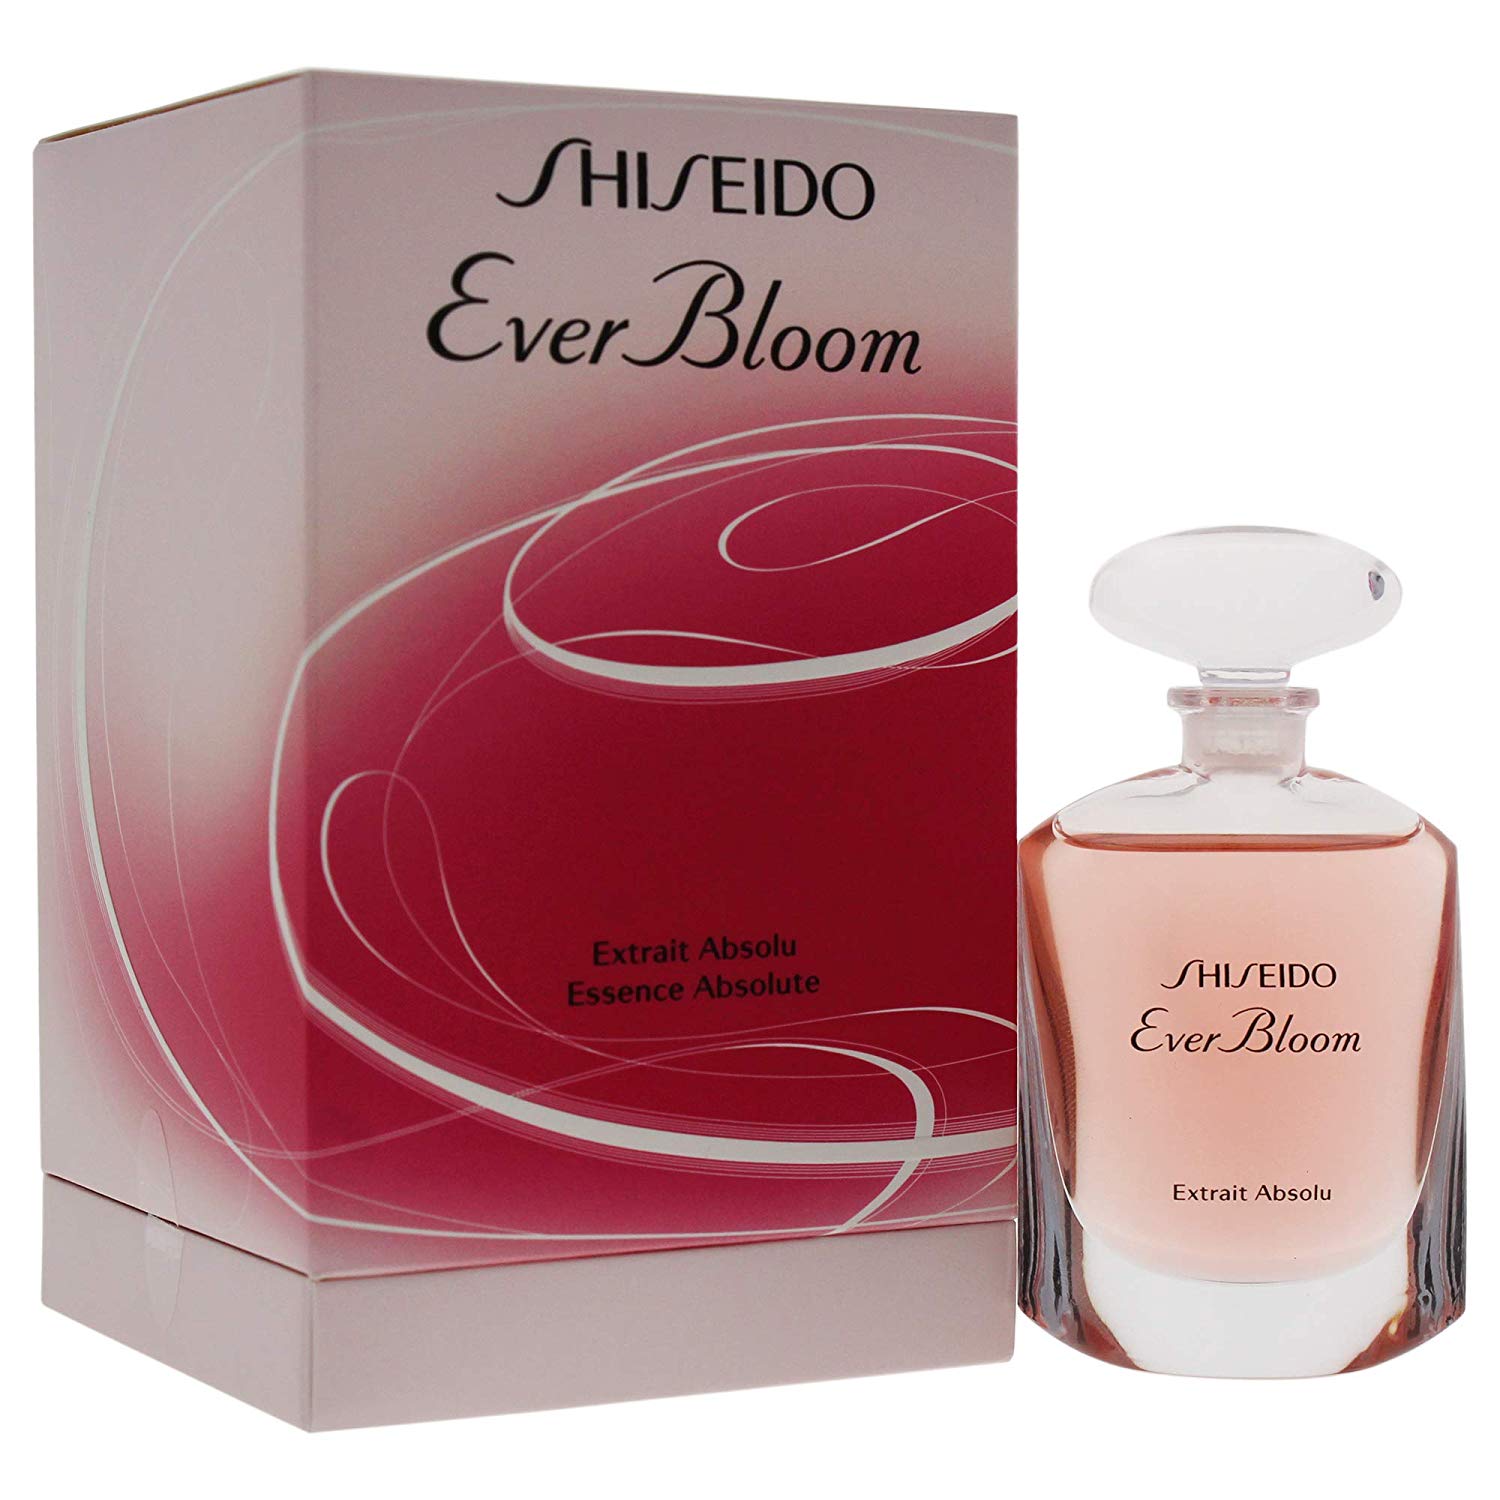 Shiseido Ever Bloom Parfum Splash